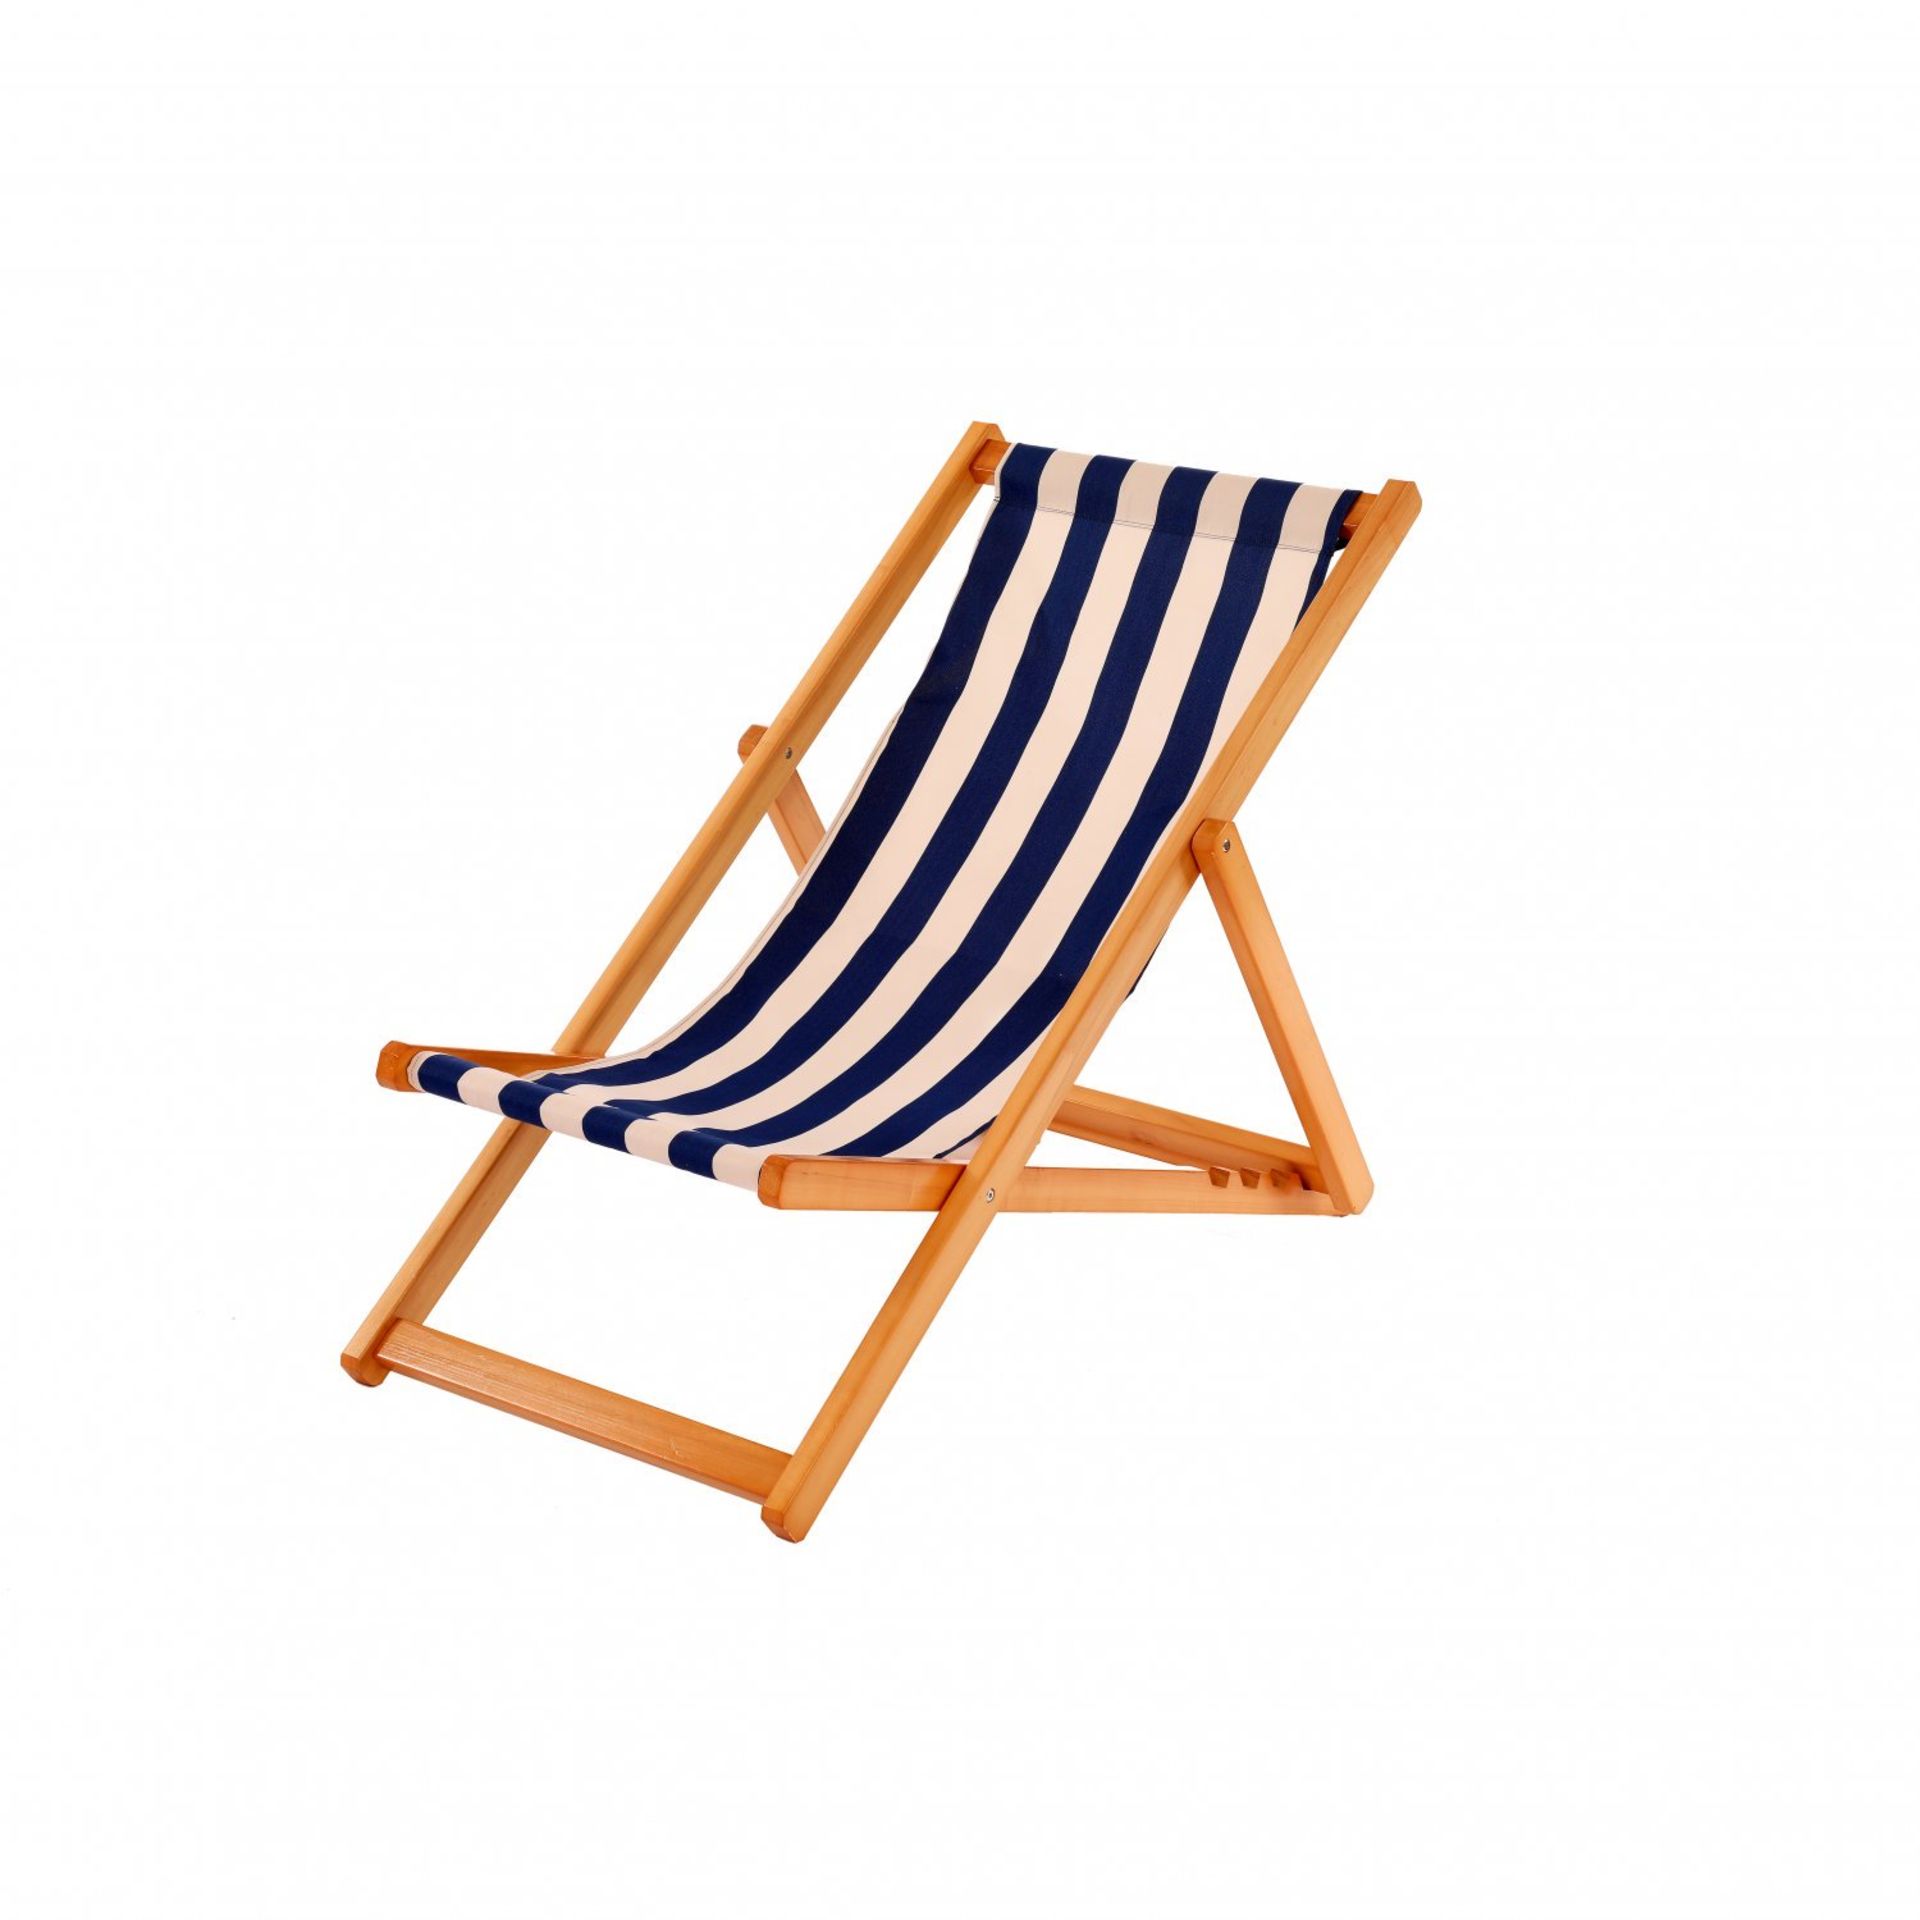 (LF209) Folding Hardwood Garden or Beach Deck Chair Deckchair Relax this summer wit... - Image 2 of 2